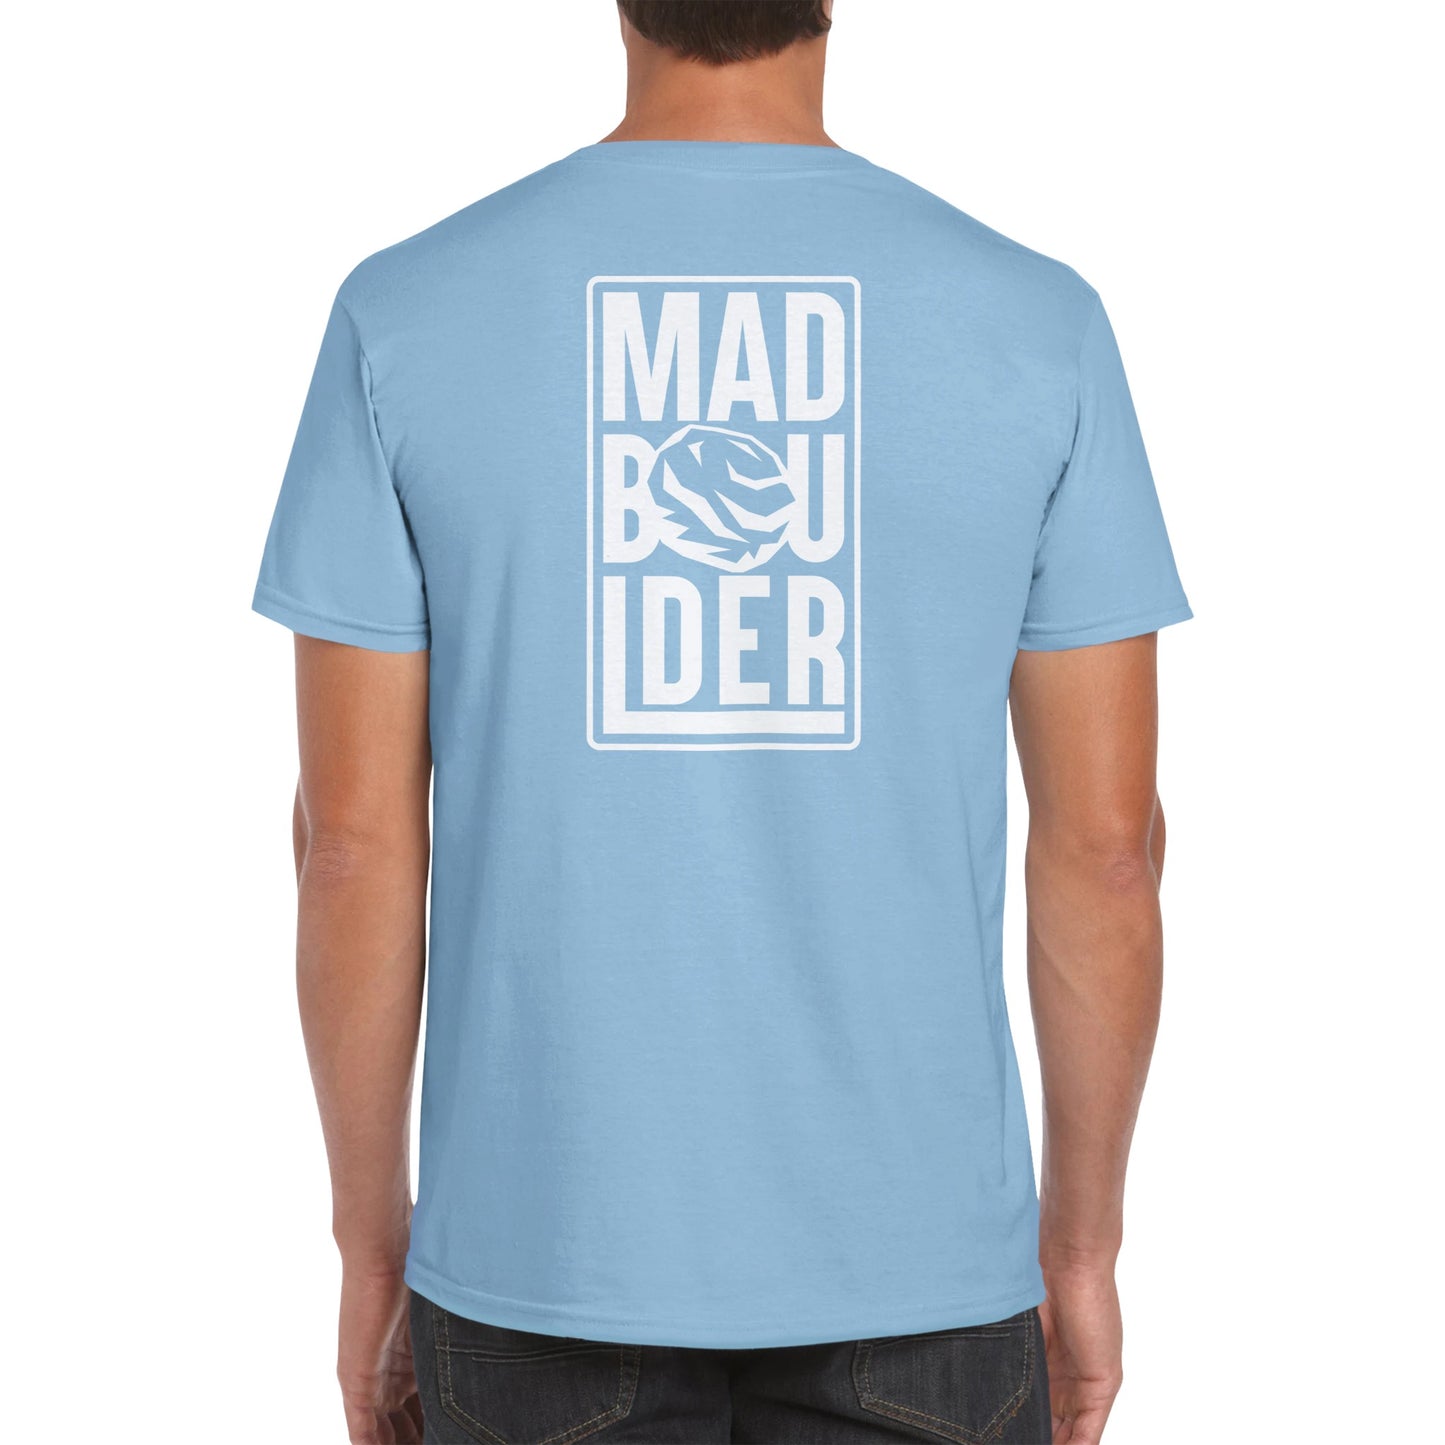 Camiseta unisex clásica MadBoulder White Edition 